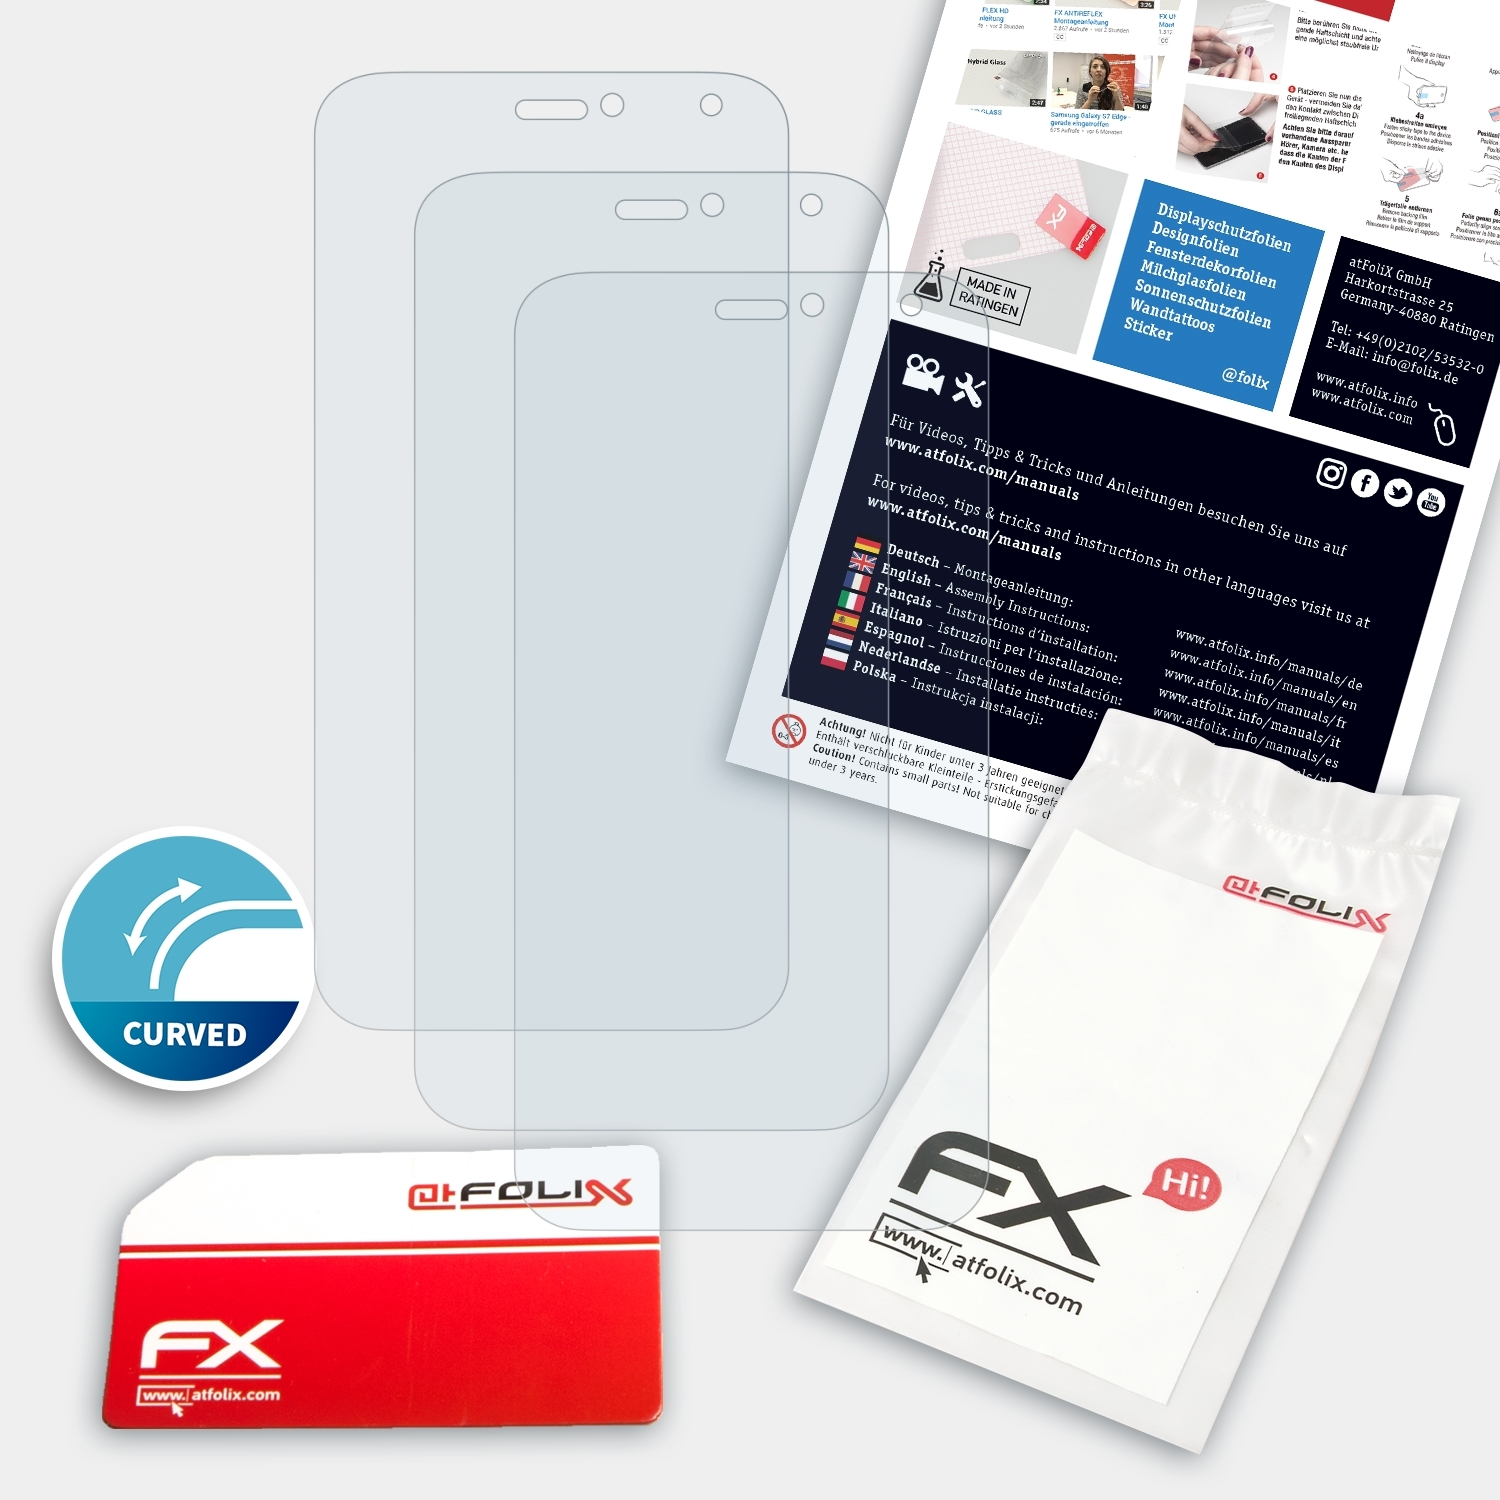 Phicomm Energy ATFOLIX 3x FX-ActiFleX Displayschutz(für Plus) 3